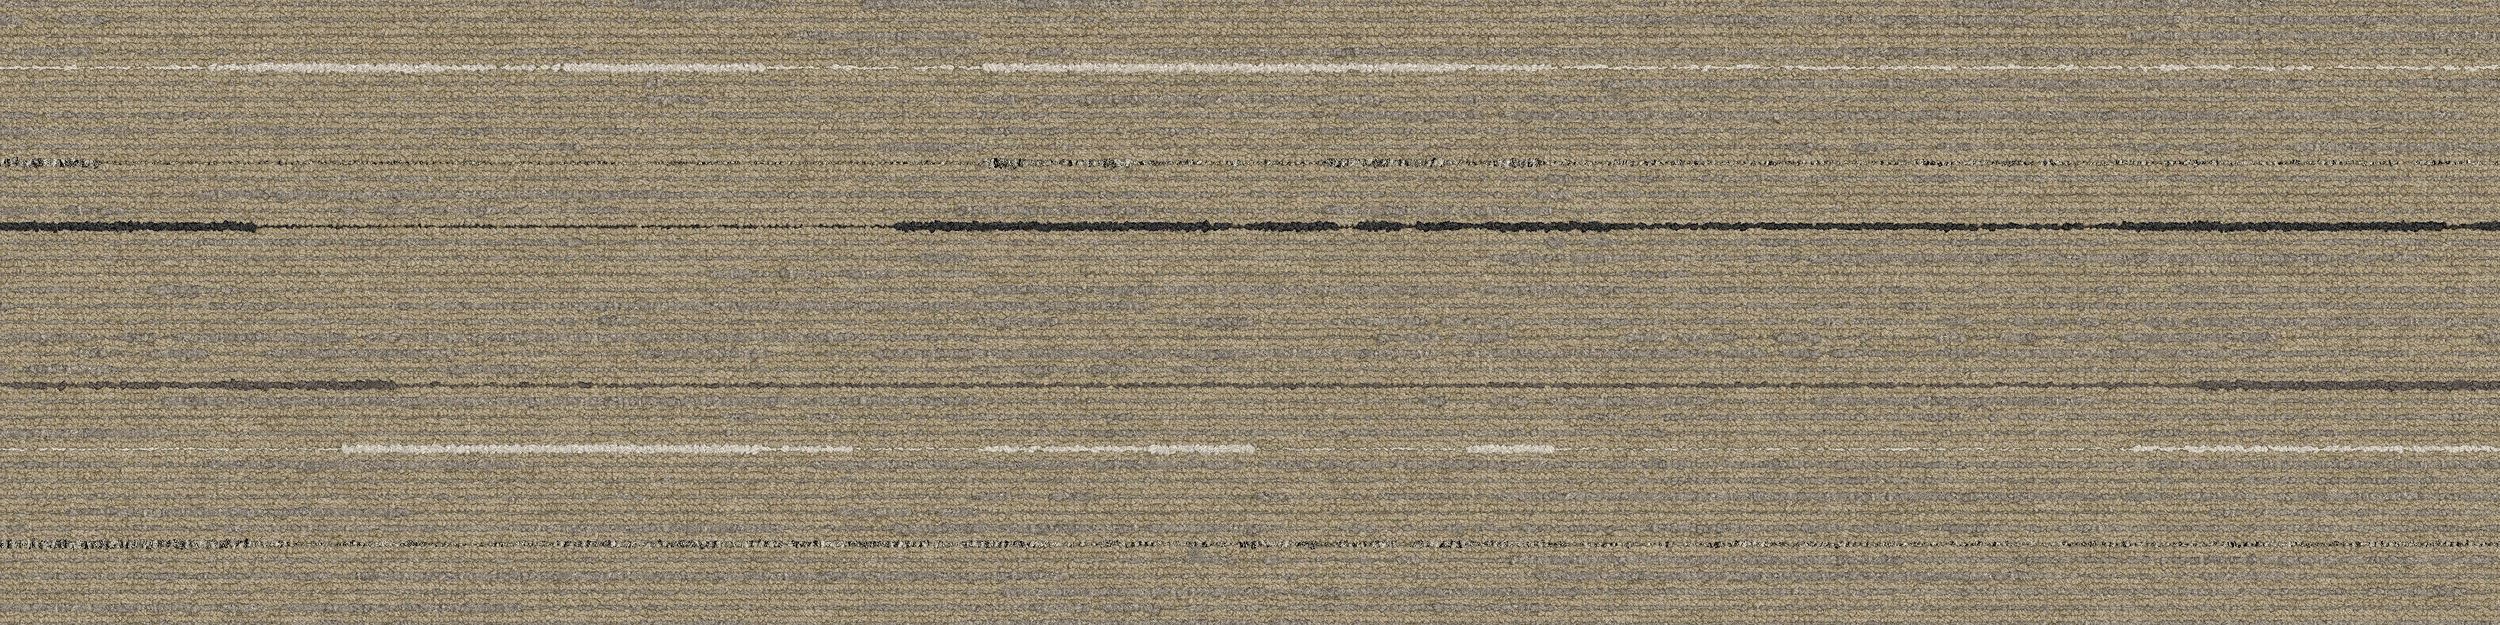 CE172 Carpet Tile In Haiku imagen número 2